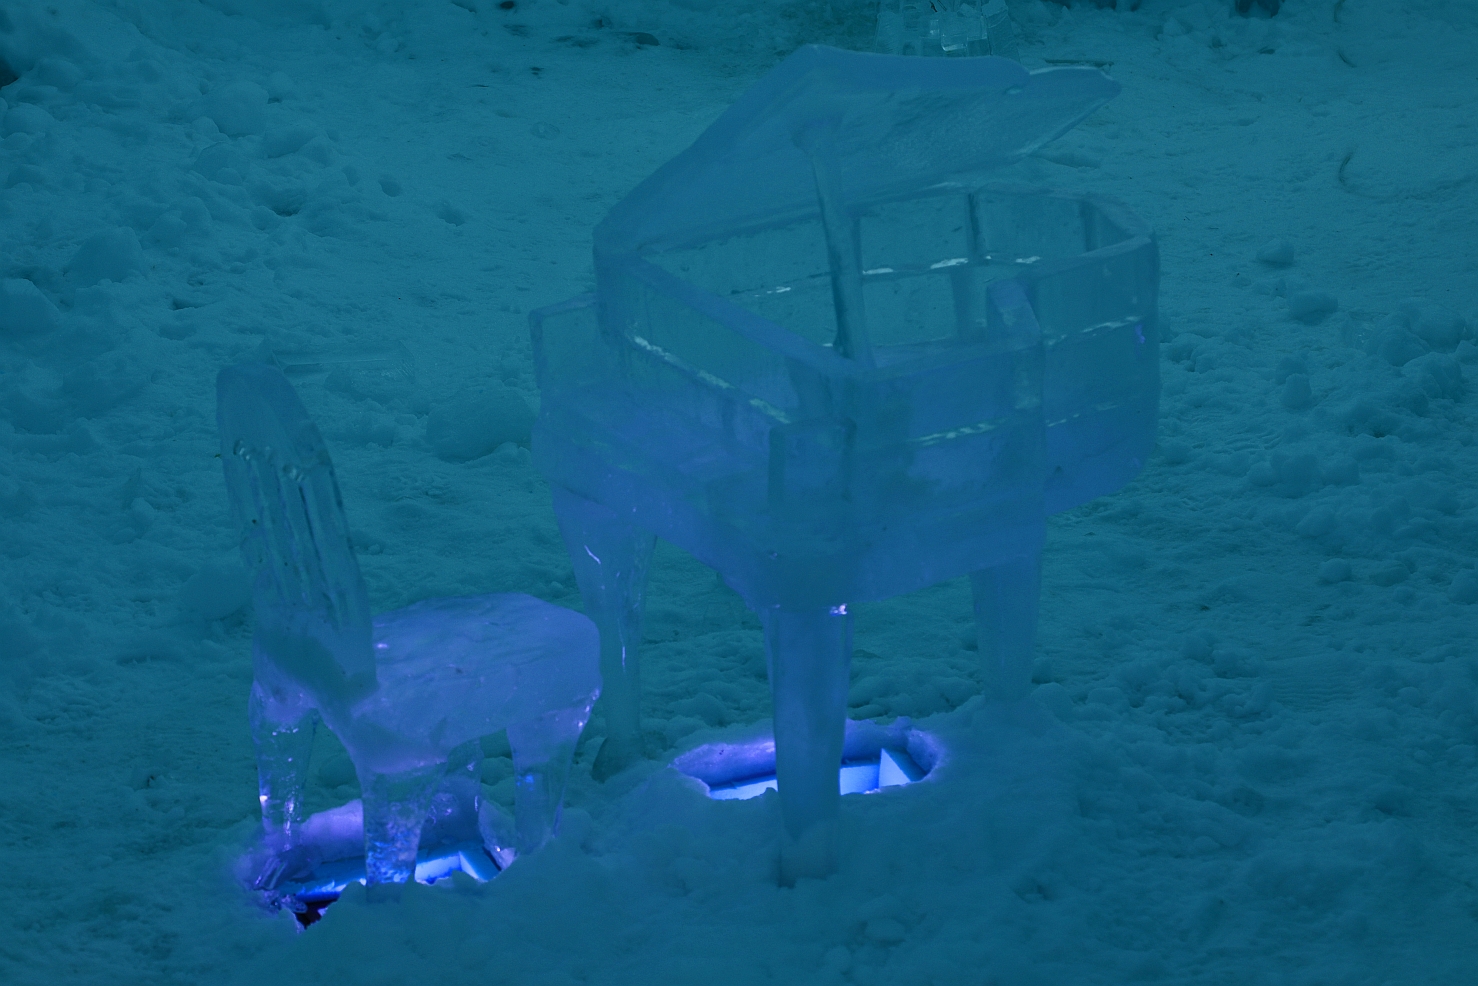 Piano ice sculpture